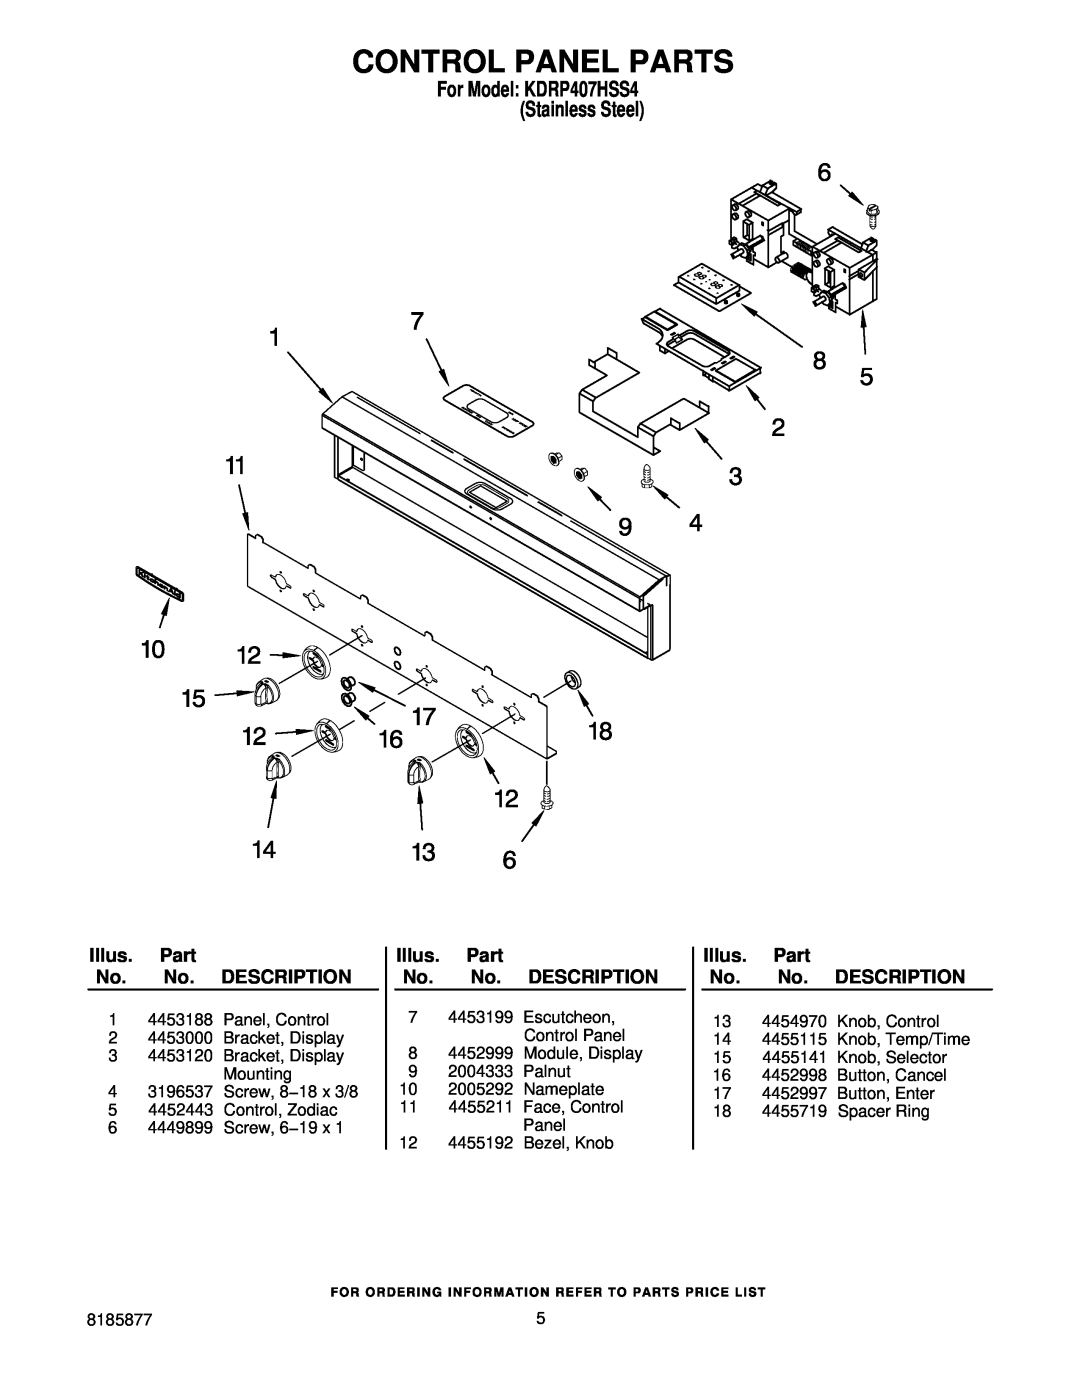 KitchenAid manual Control Panel Parts, For Model KDRP407HSS4 Stainless Steel, Illus. Part No. No. DESCRIPTION 